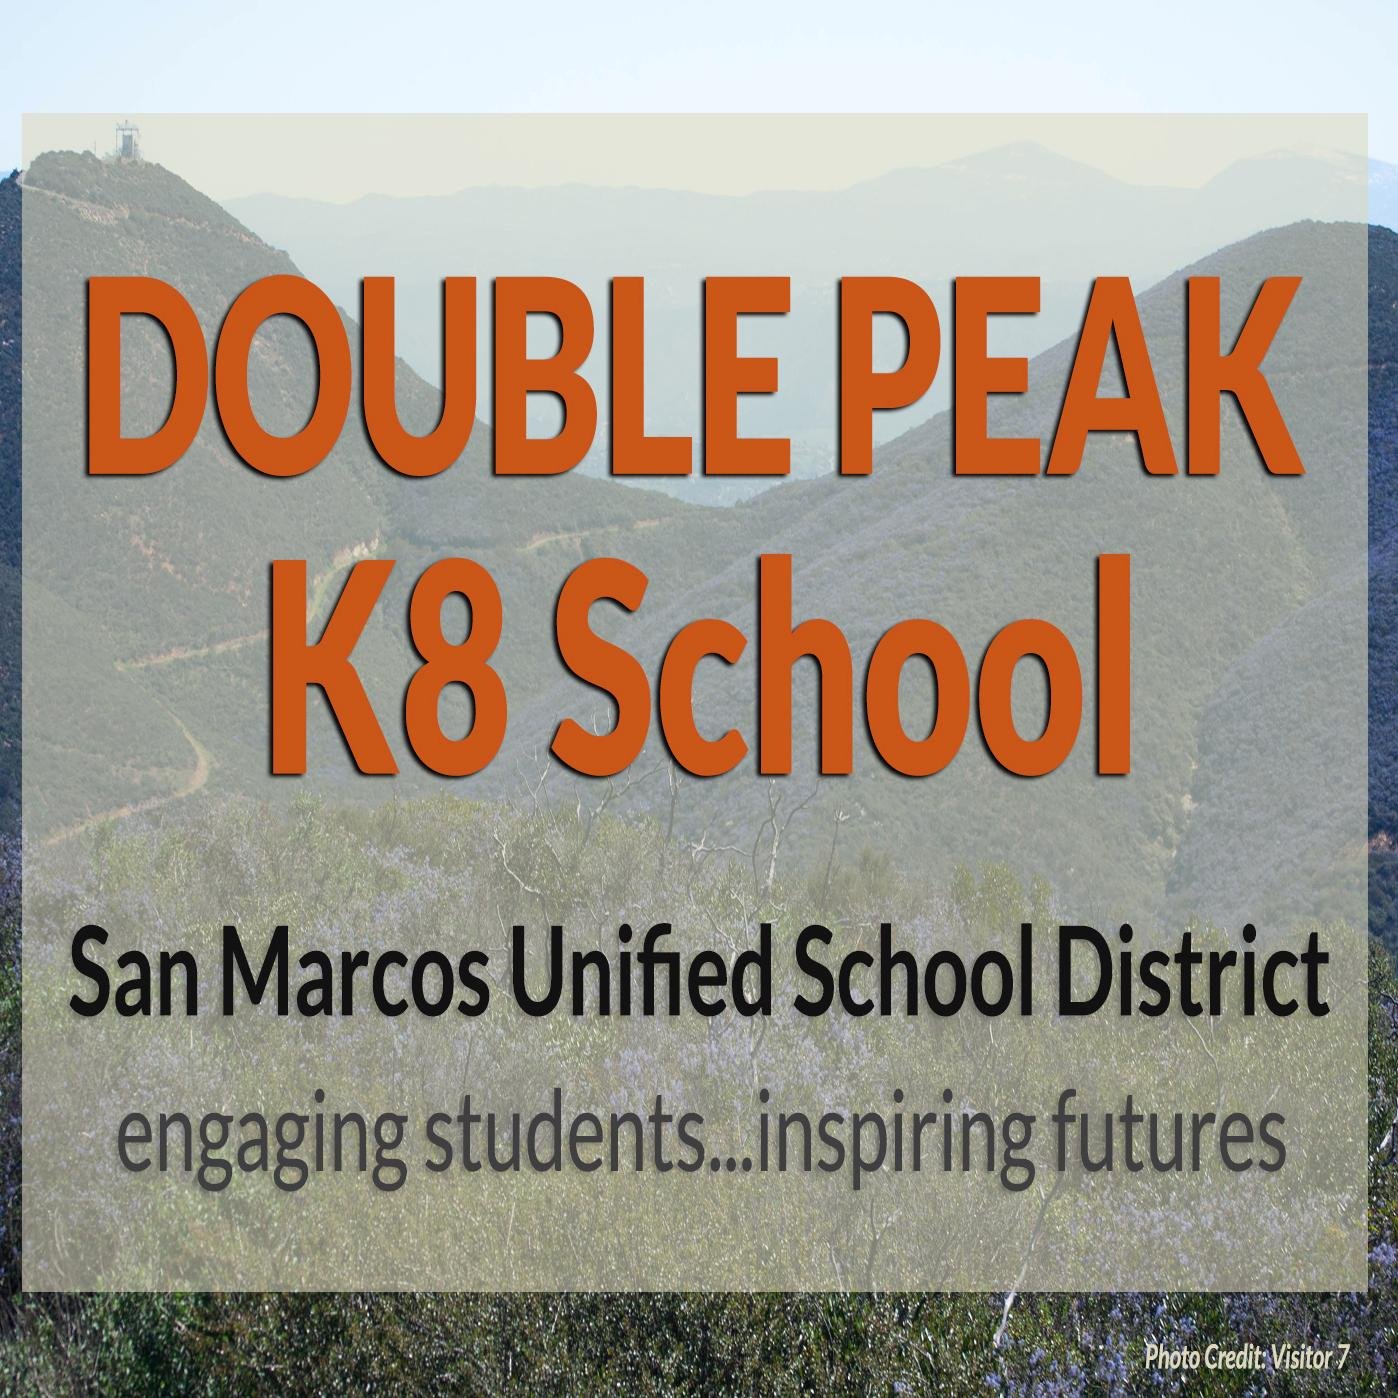 Double Peak is San Marcos Unified School District's K8 School focused on music, art, innovation, and Leader in Me #dpsk8